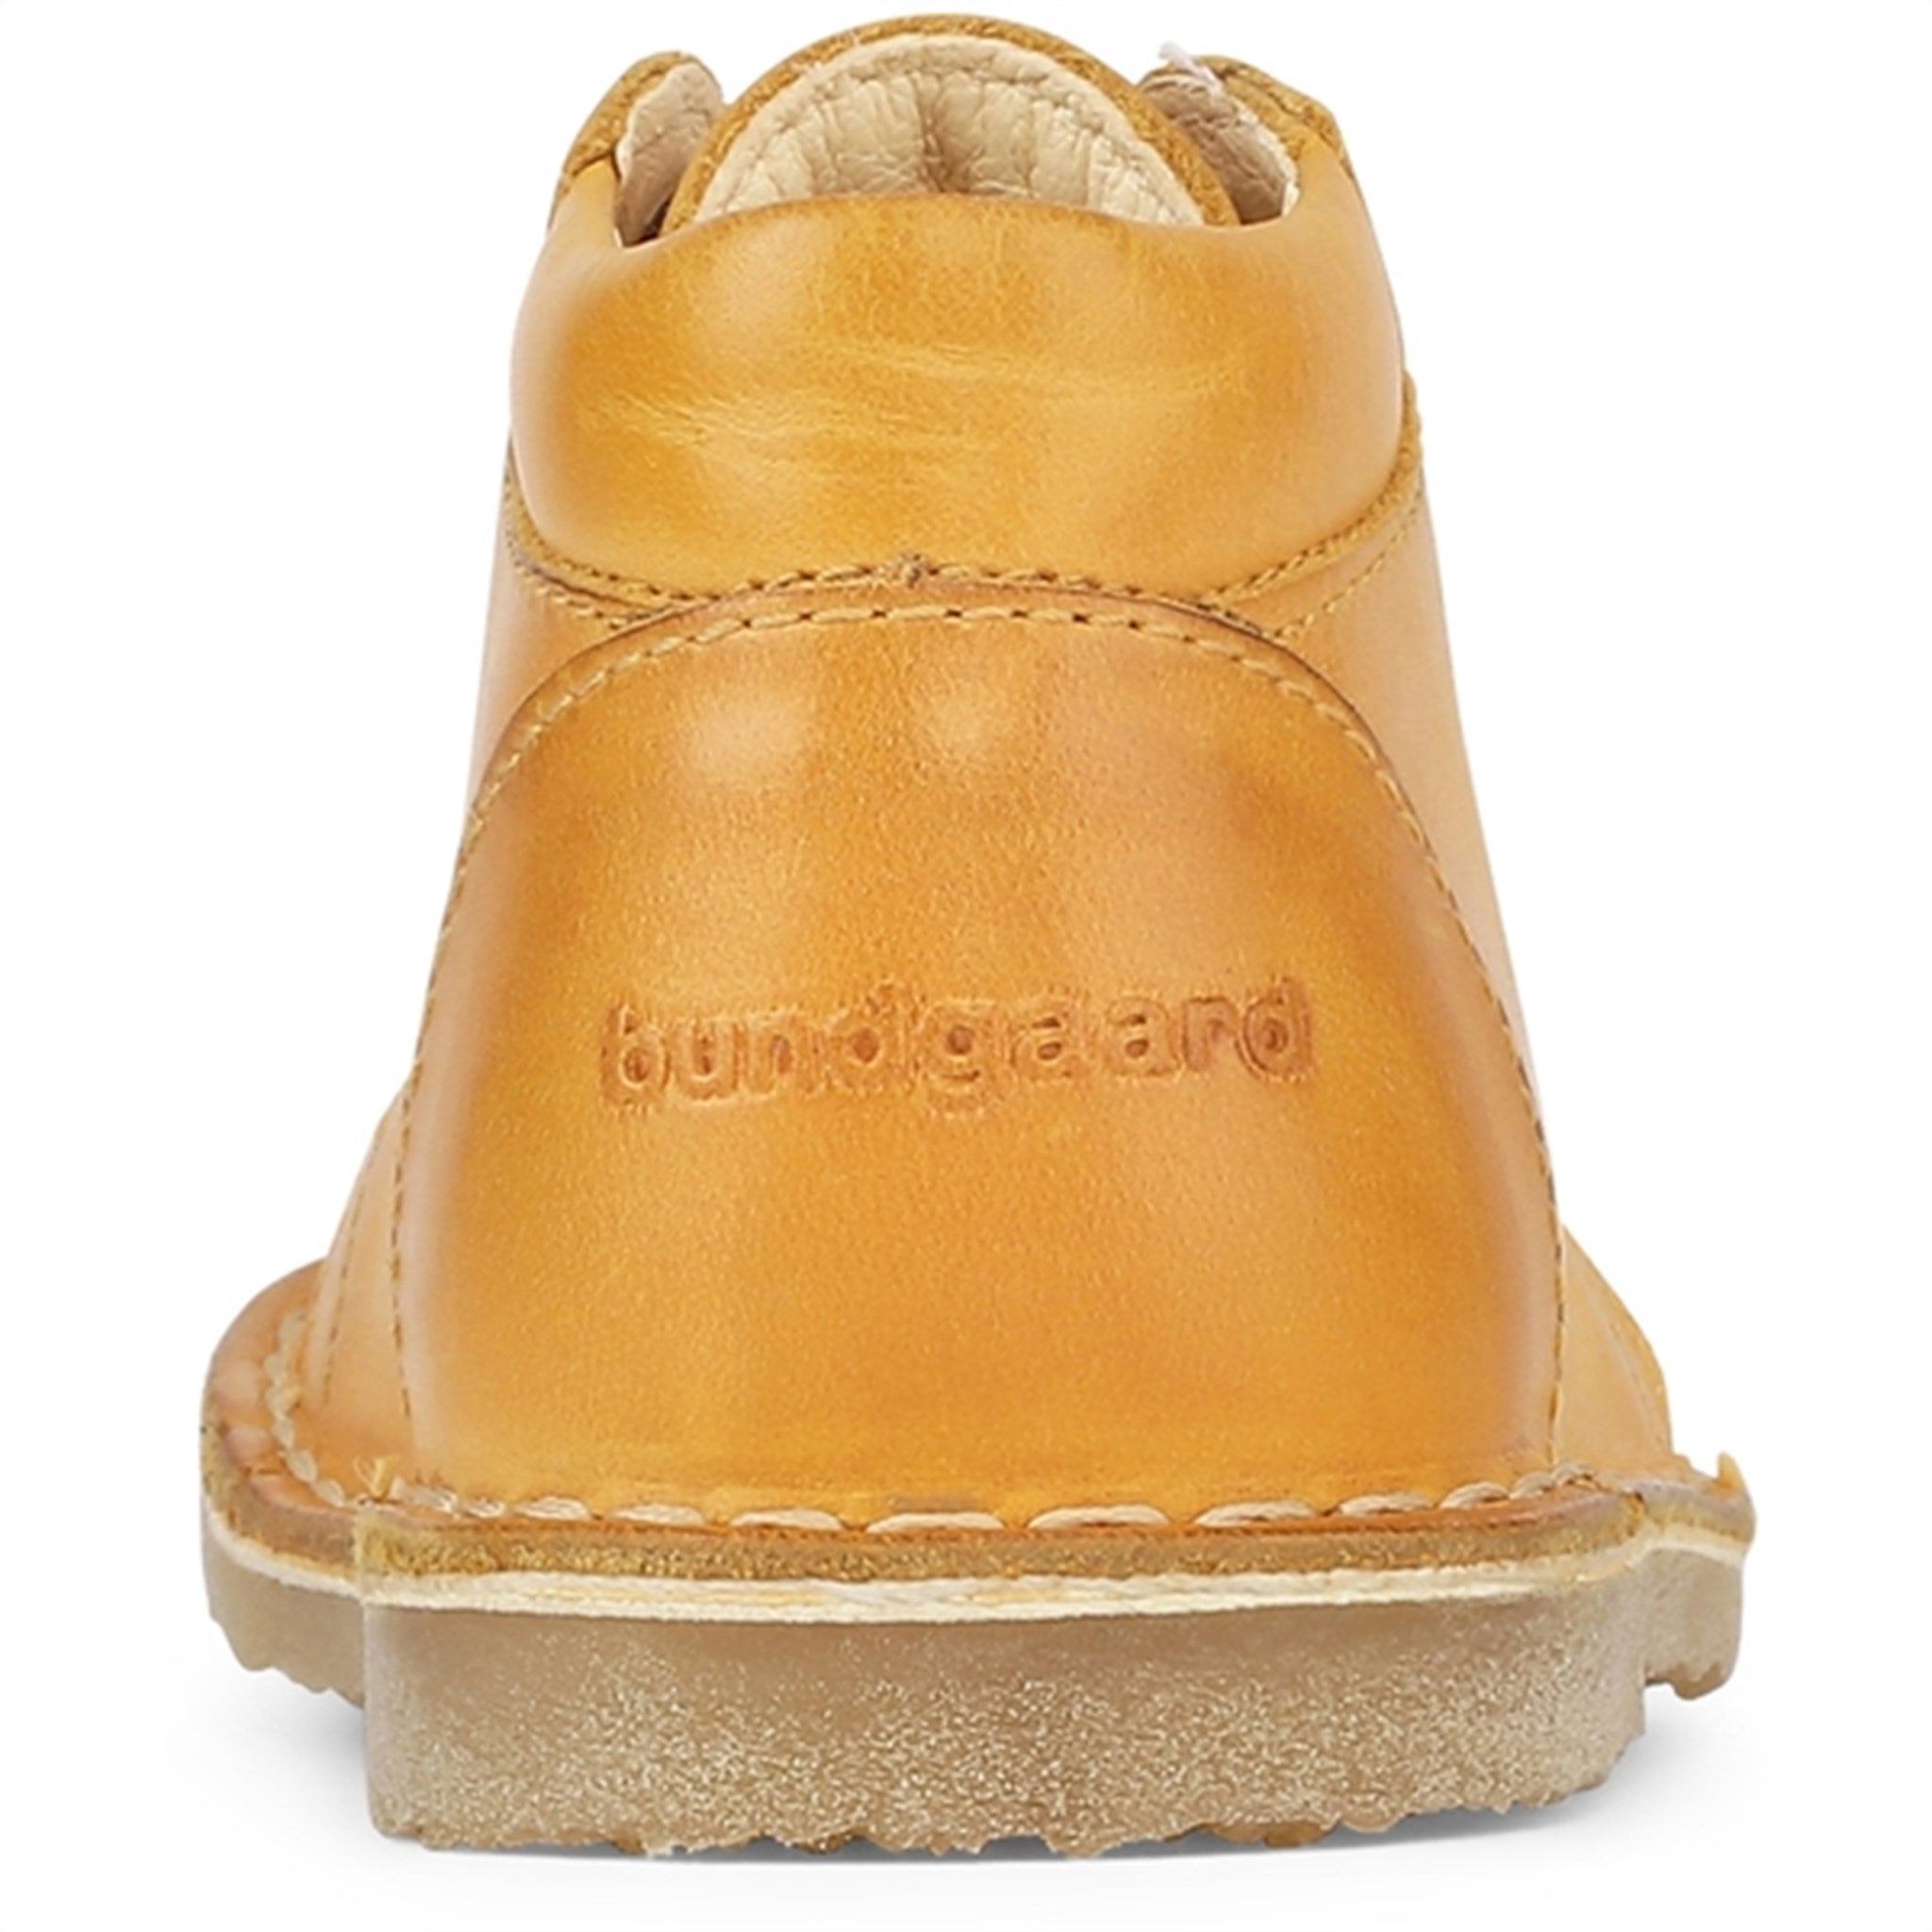 Bundgaard Oma Lace Yellow WS Shoe 3